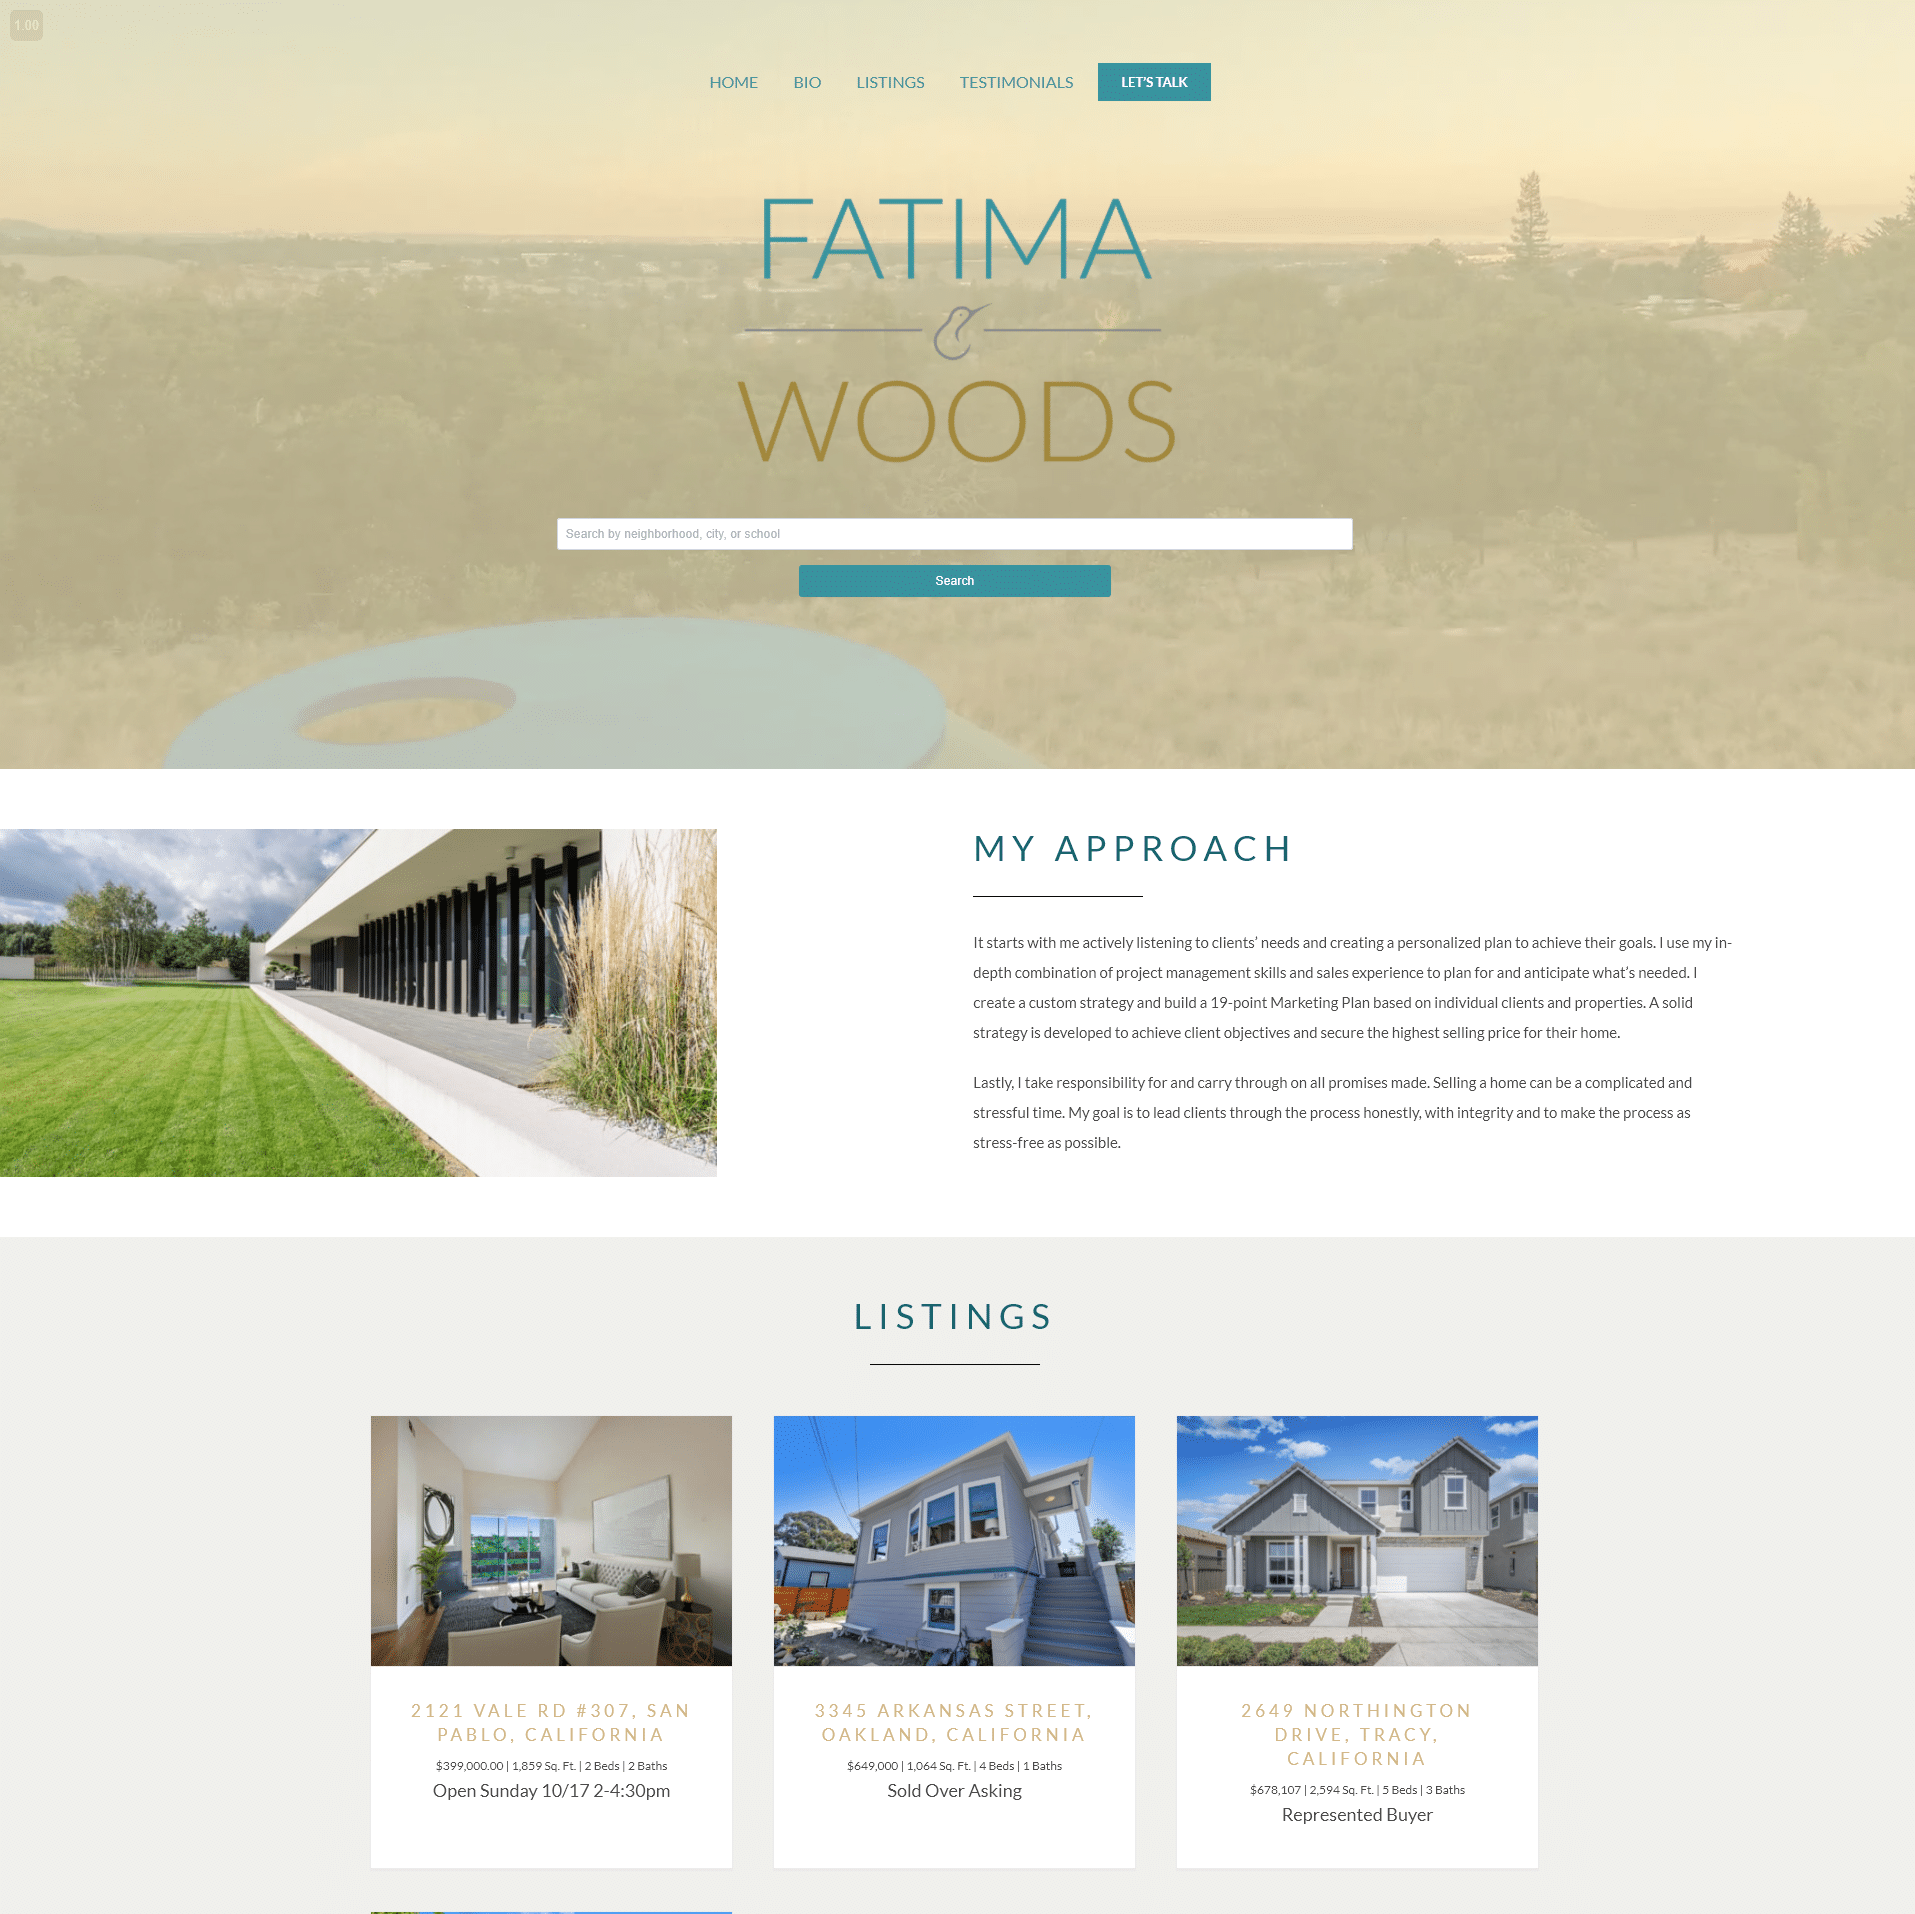 Fatima Woods fatimawoods.com